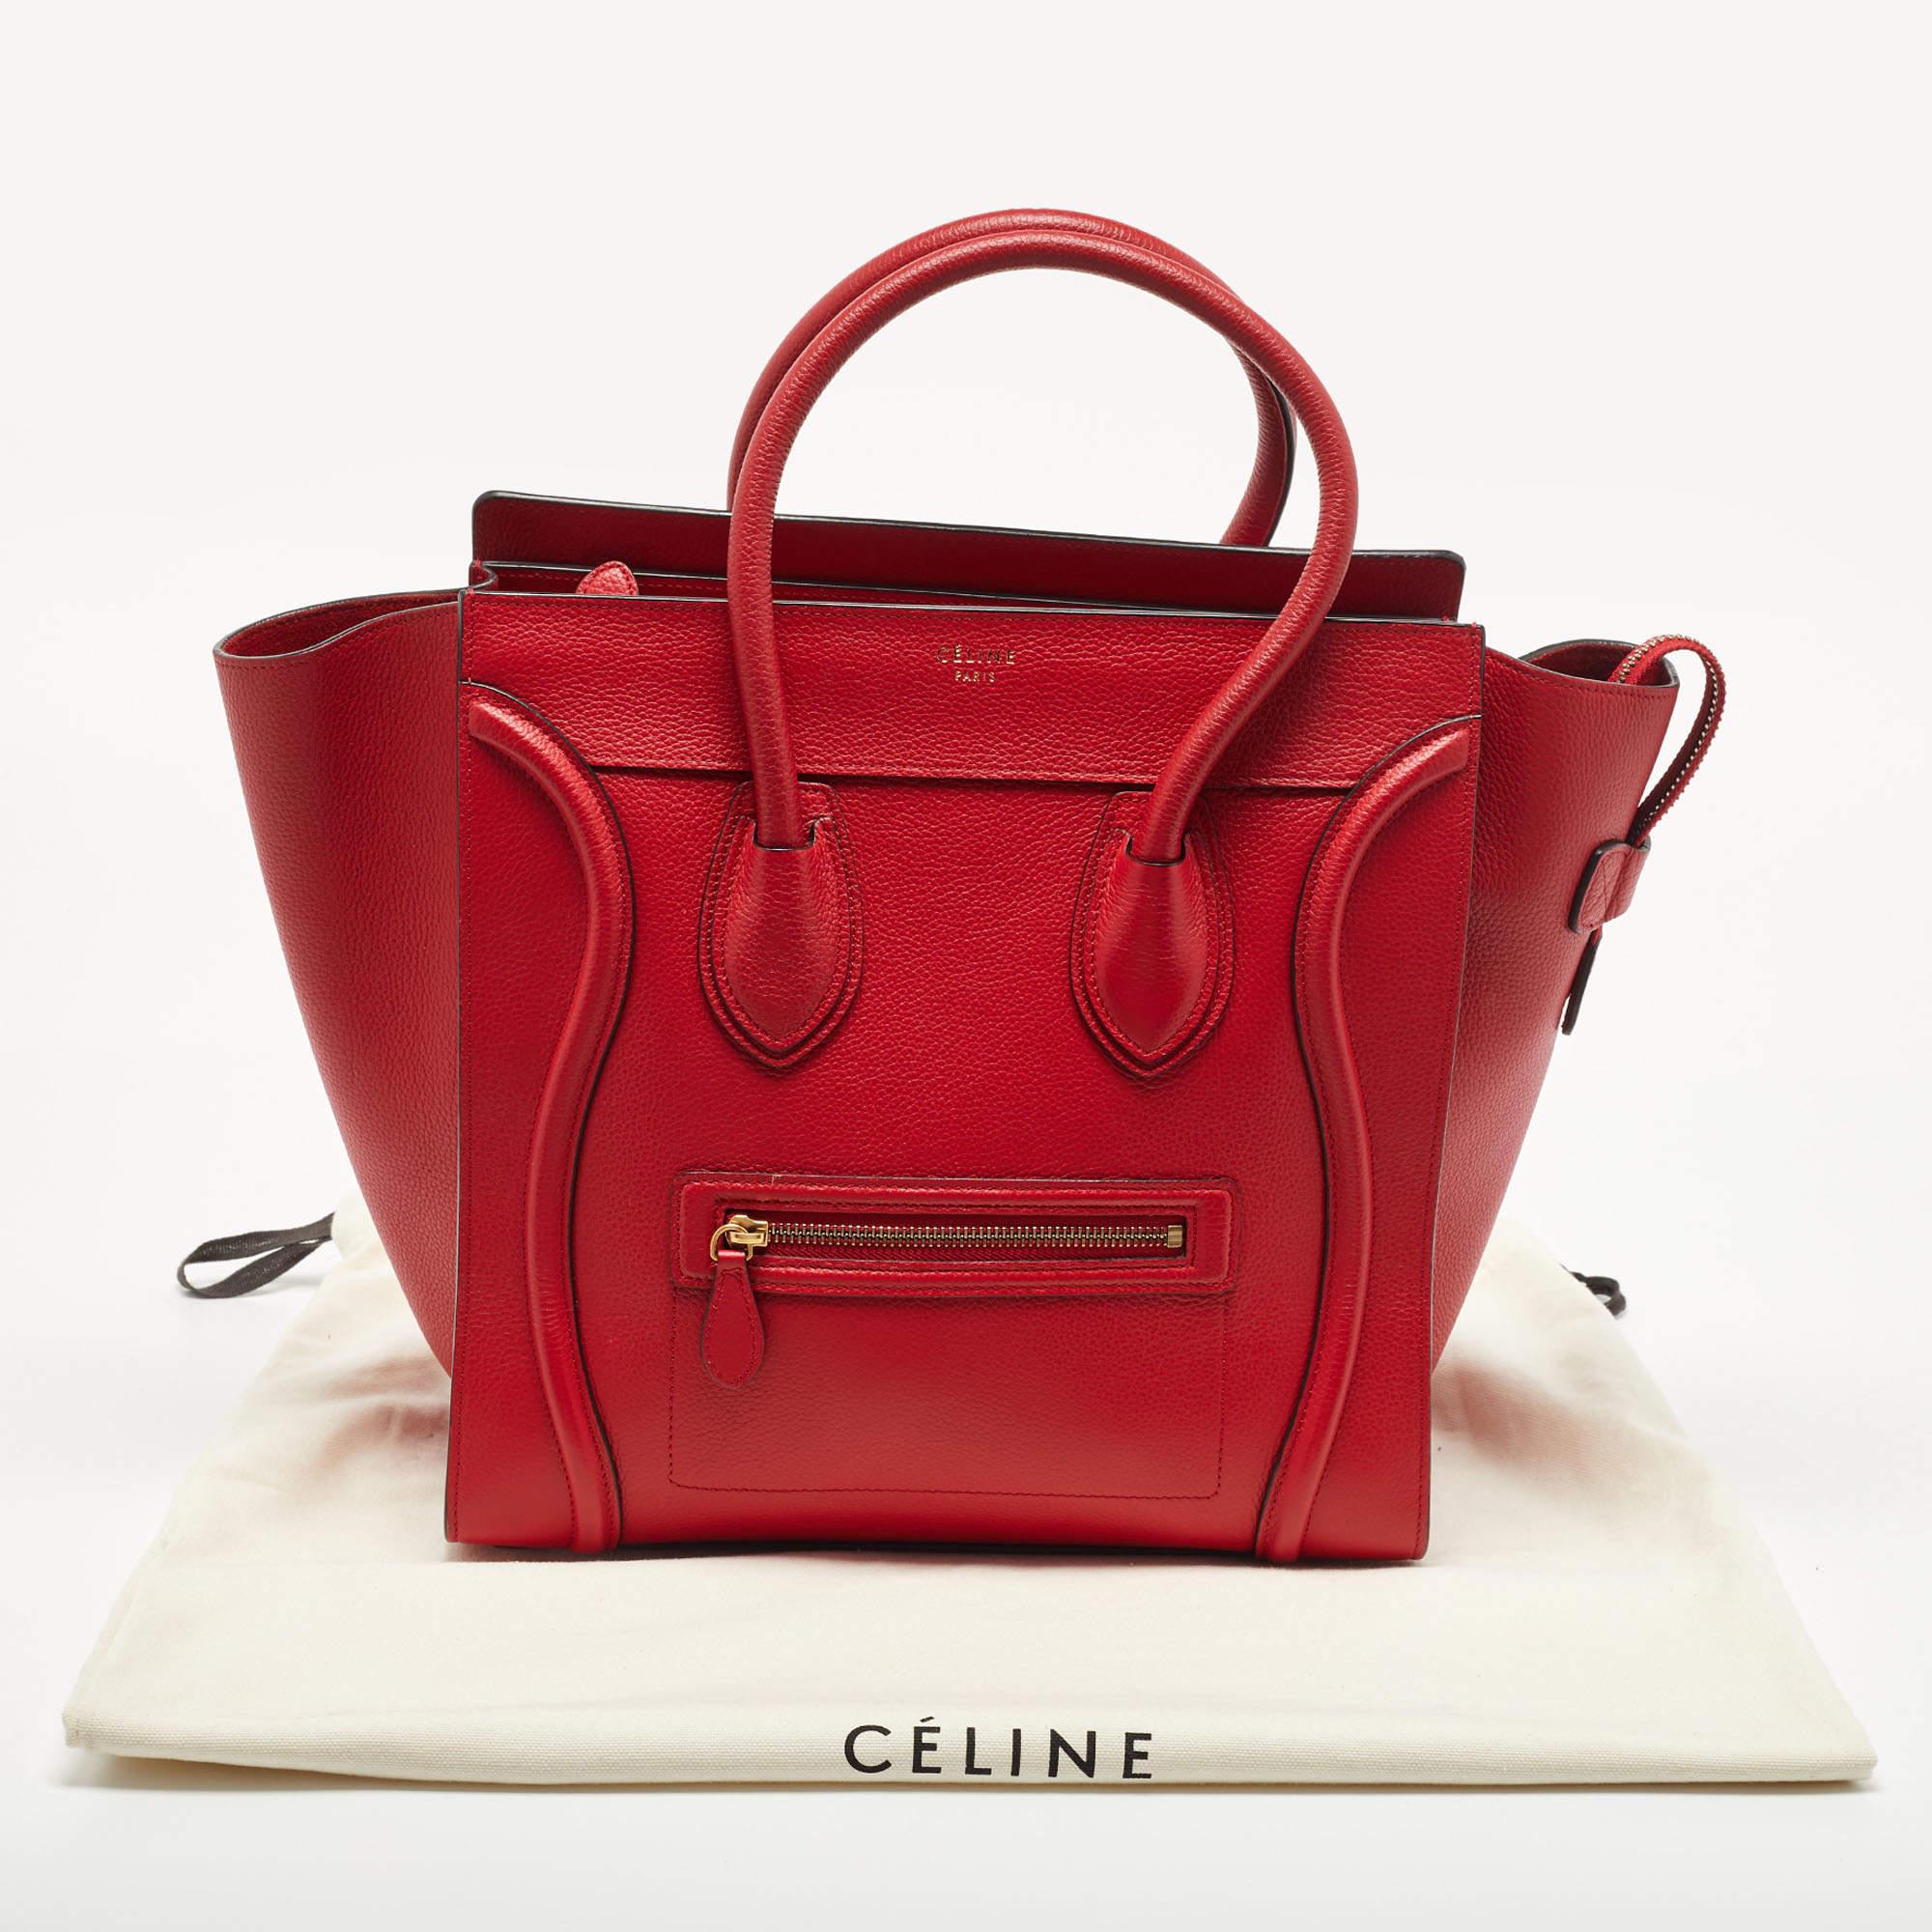 Celine Red Leather Mini Luggage Tote 9